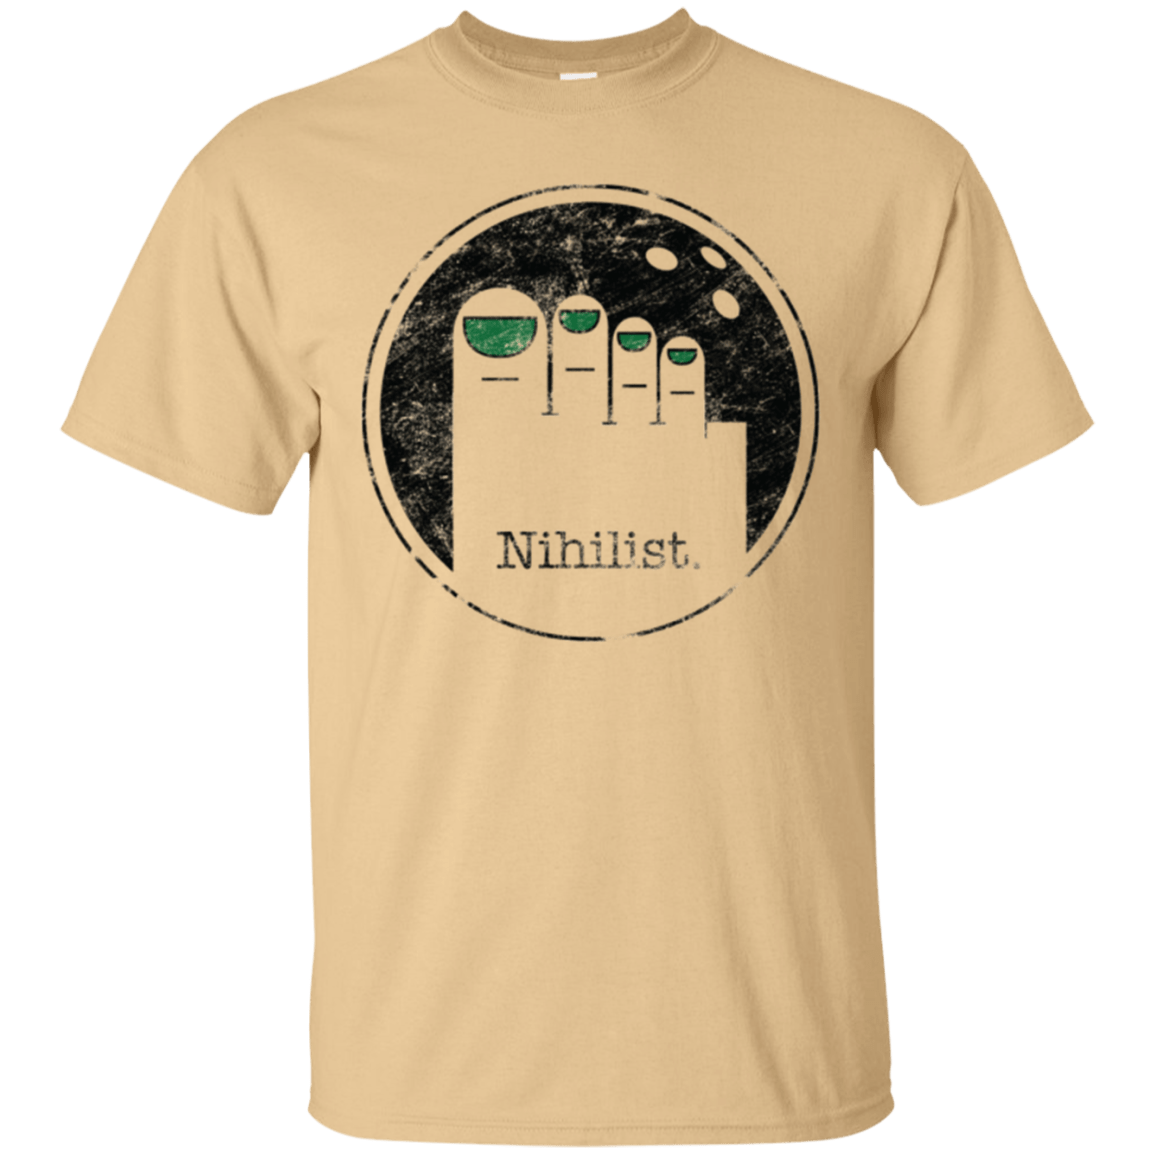 Minimalist Nihilist T-Shirt Pop Tee